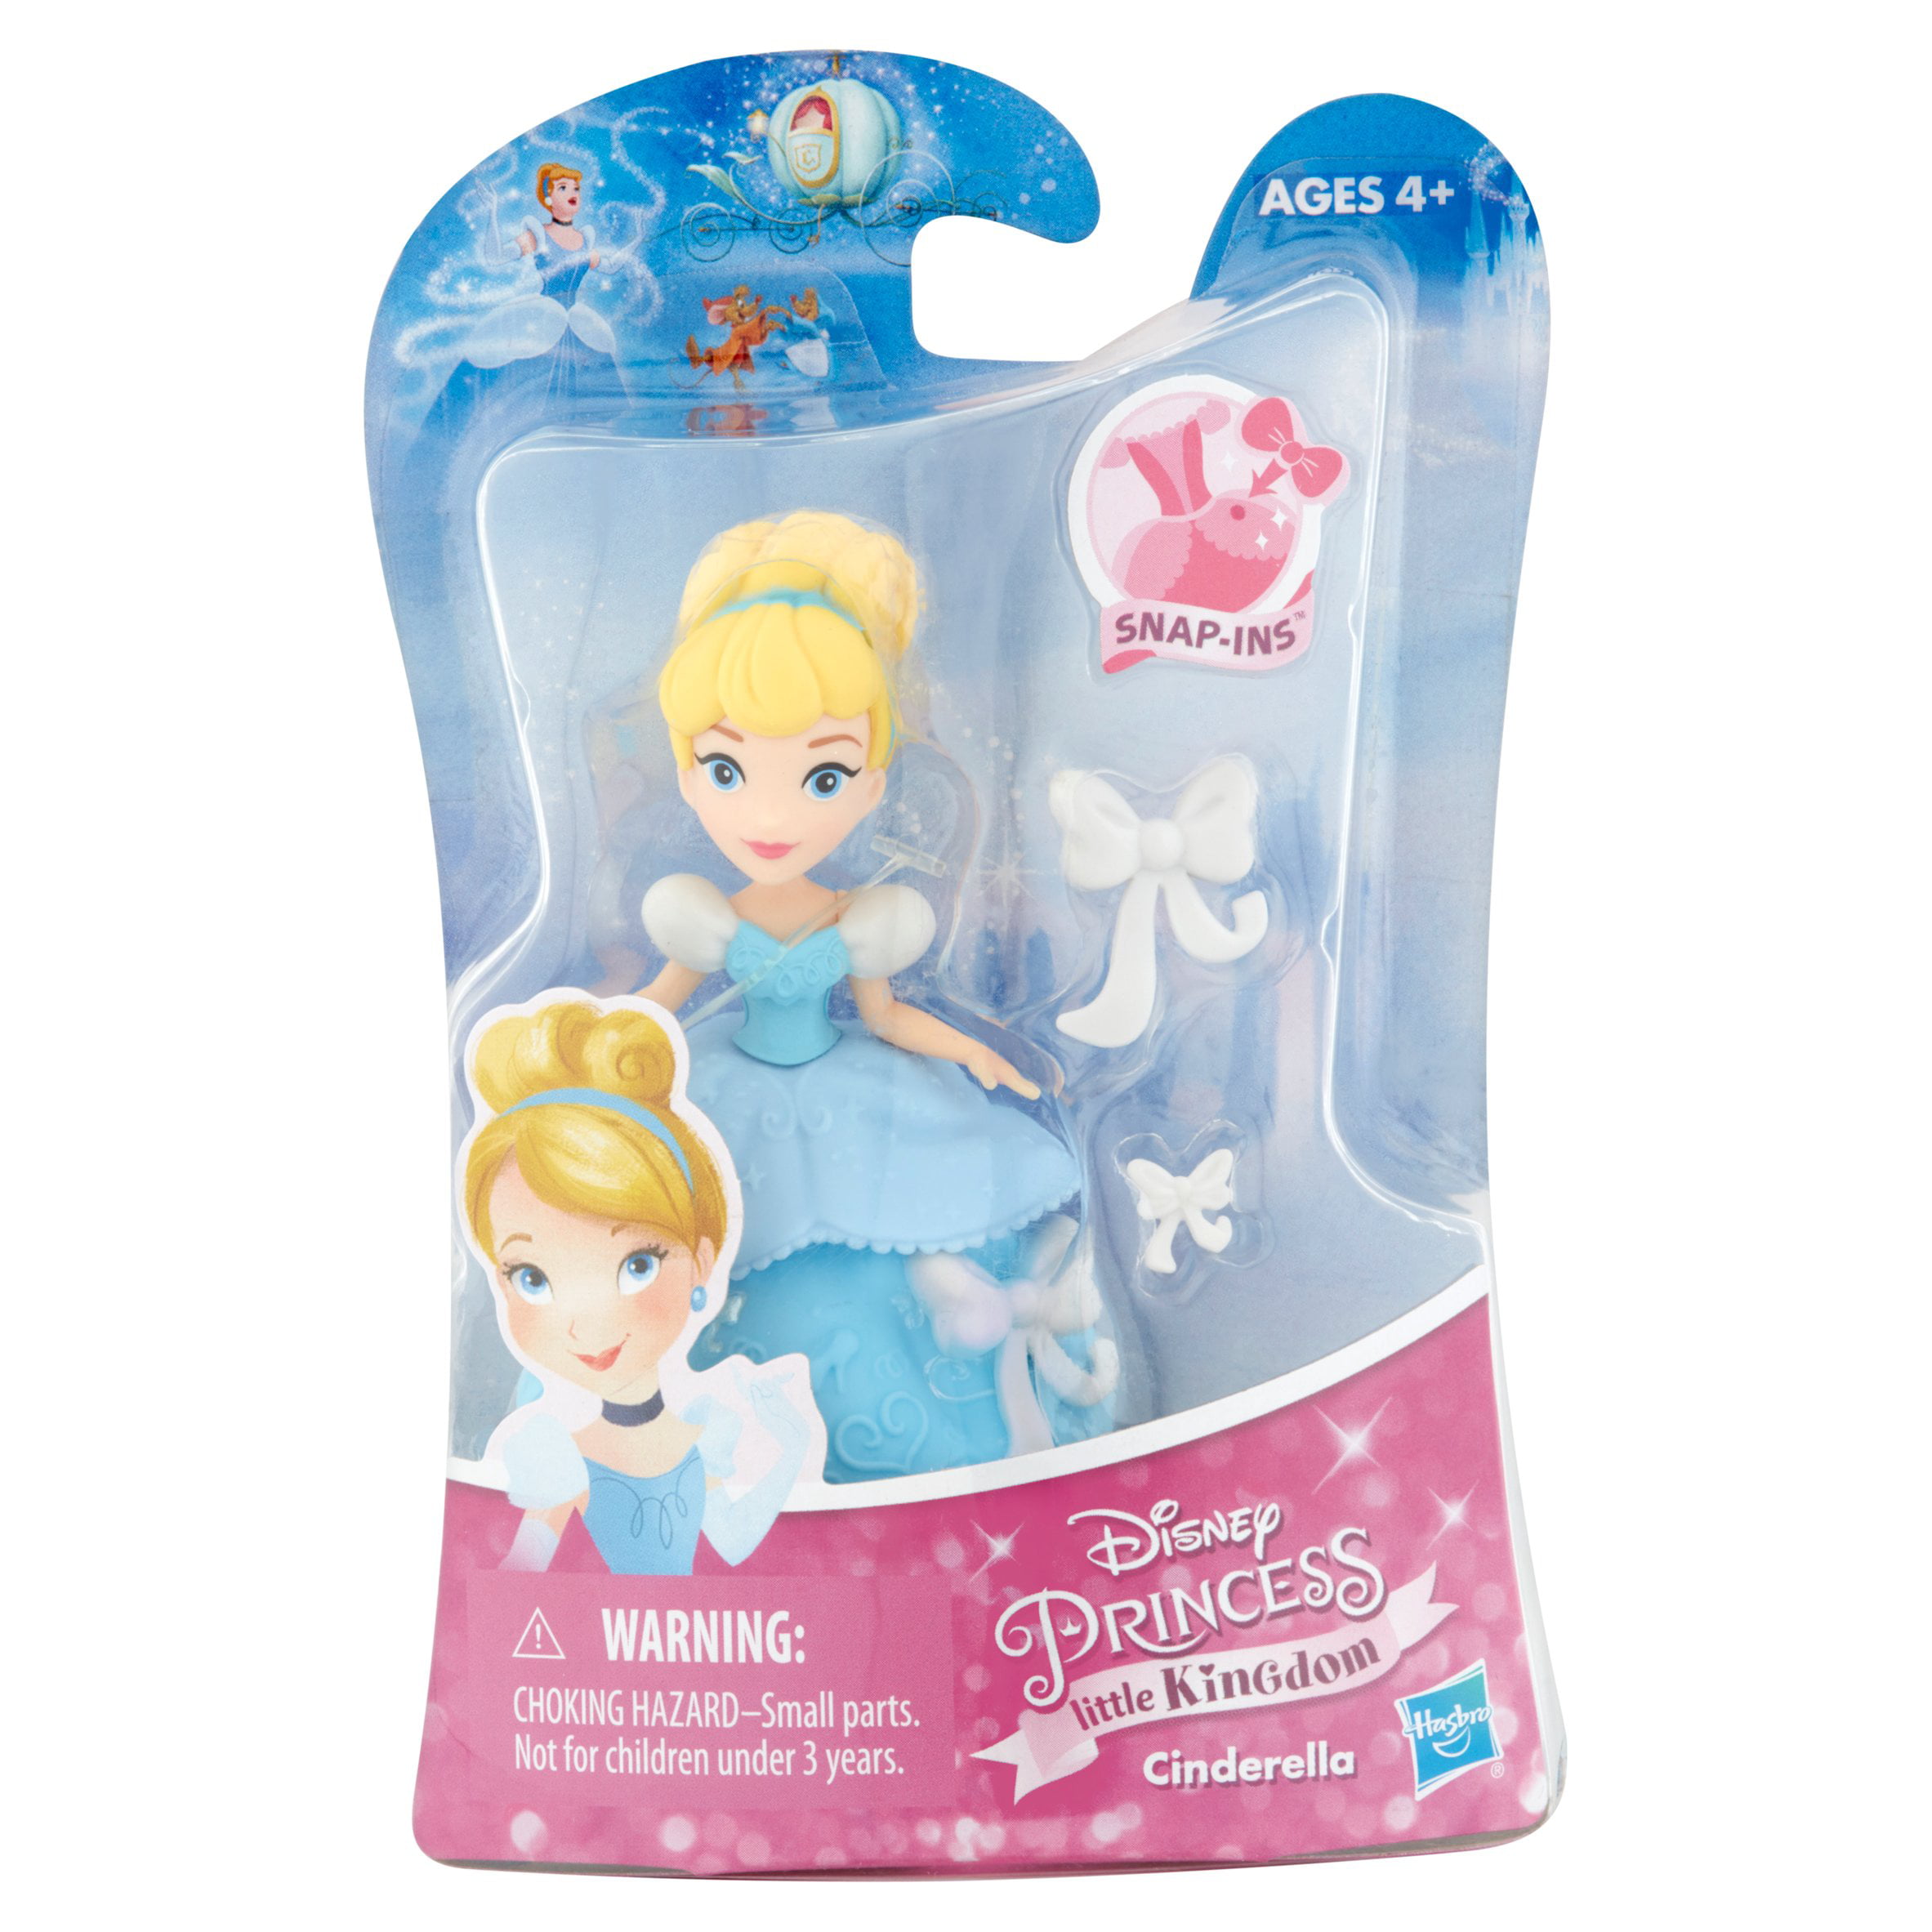 Disney Princess Little Kingdom Mini Figure Cinderella Hasbro Snap-Ins Doll